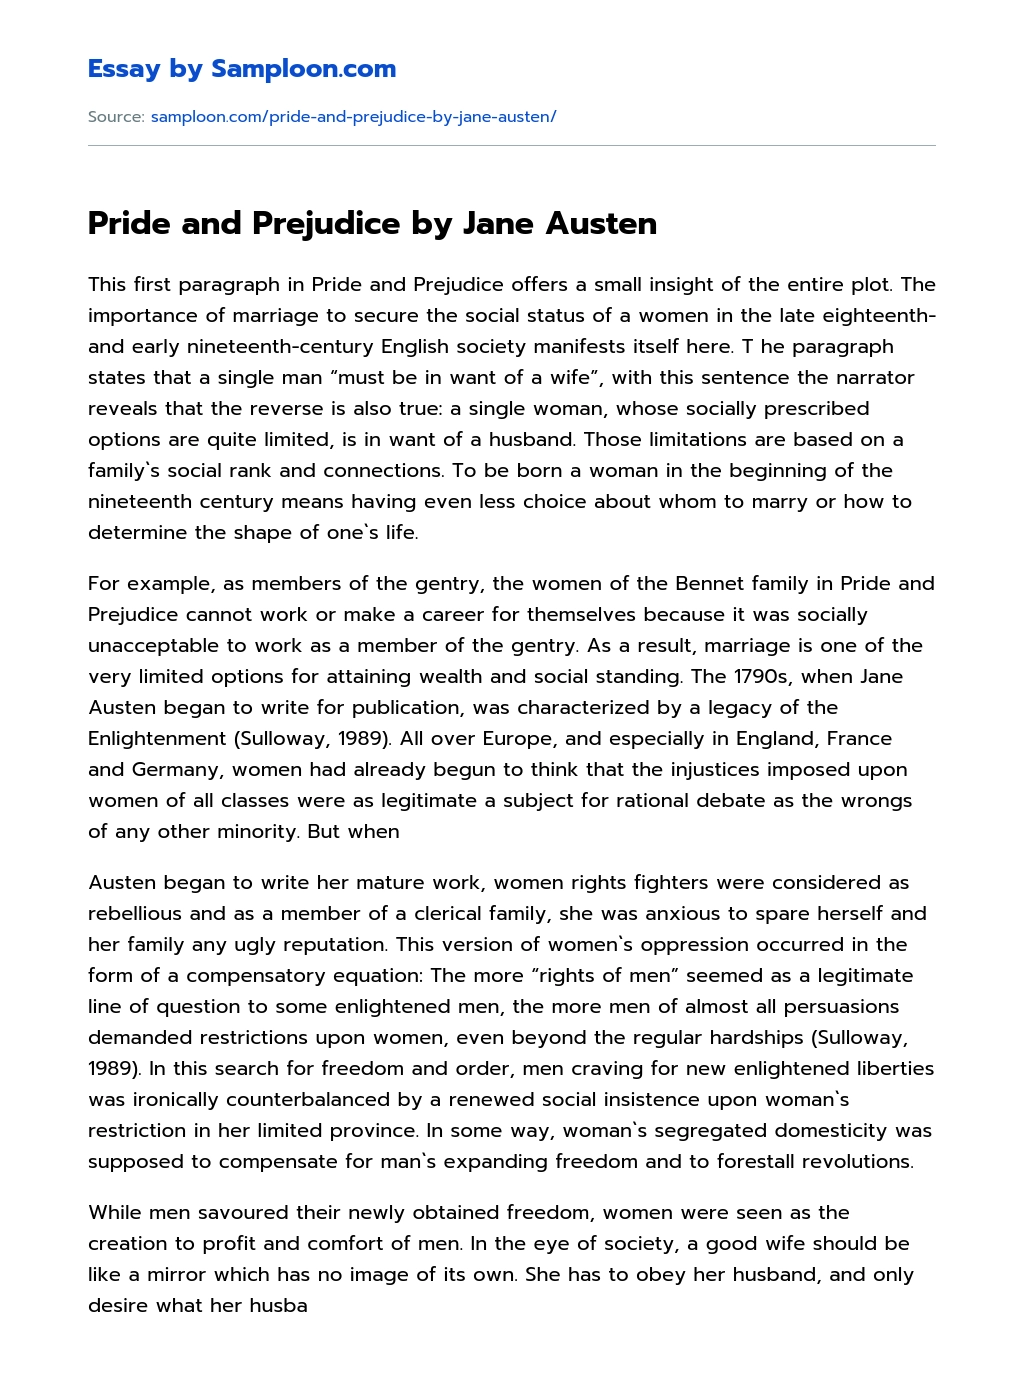 Pride and Prejudice by Jane Austen essay